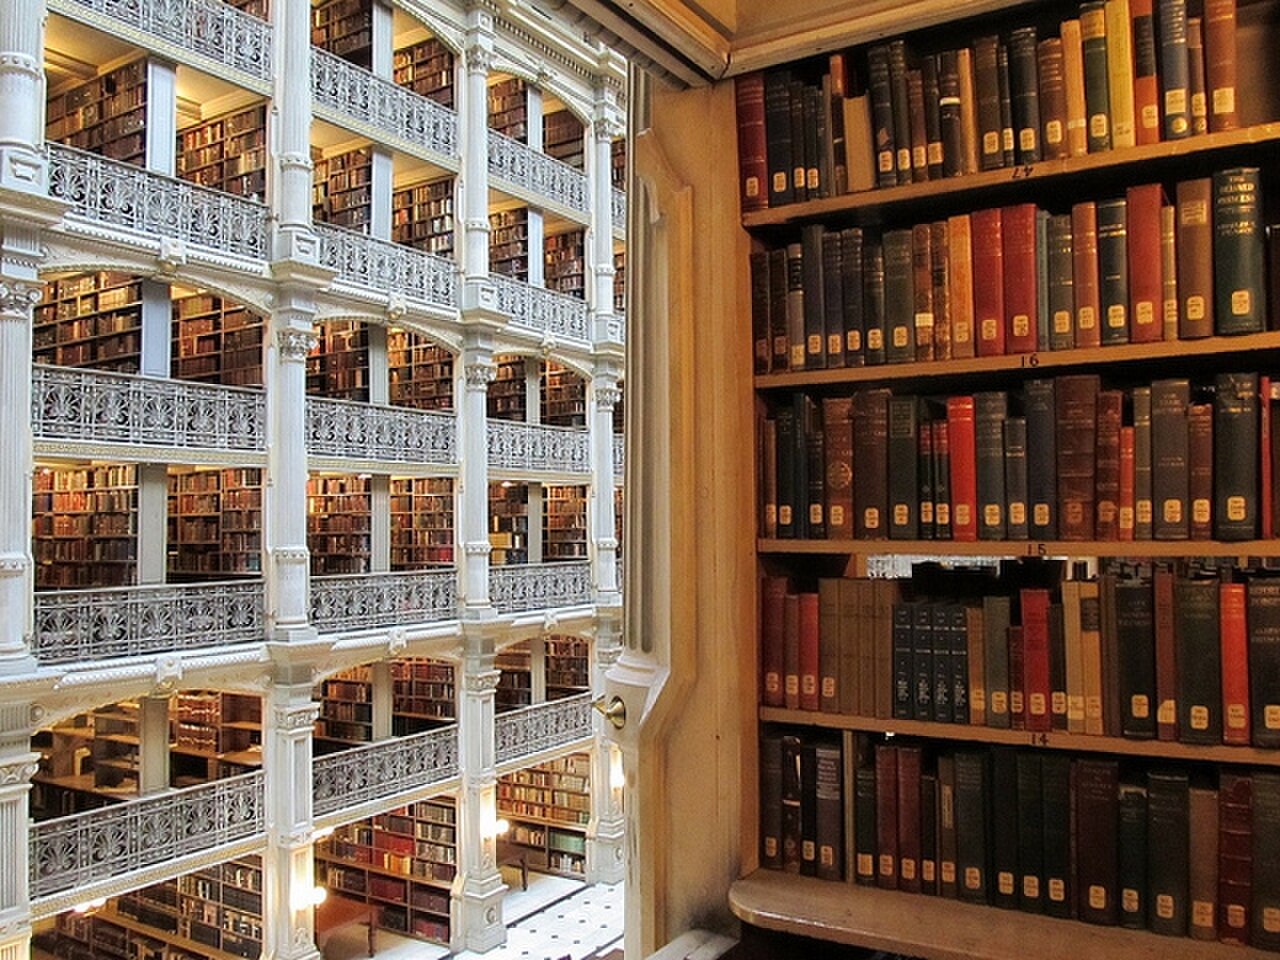 Открытый мир библиотеки. Библиотека Джорджа Пибоди. Библиотека Джорджа Пибоди, Балтимор, США. Библиокеи Джоджа пиоди. Библиотека имени Джорджа Пибоди, Балтимор, штат Мэриленд.